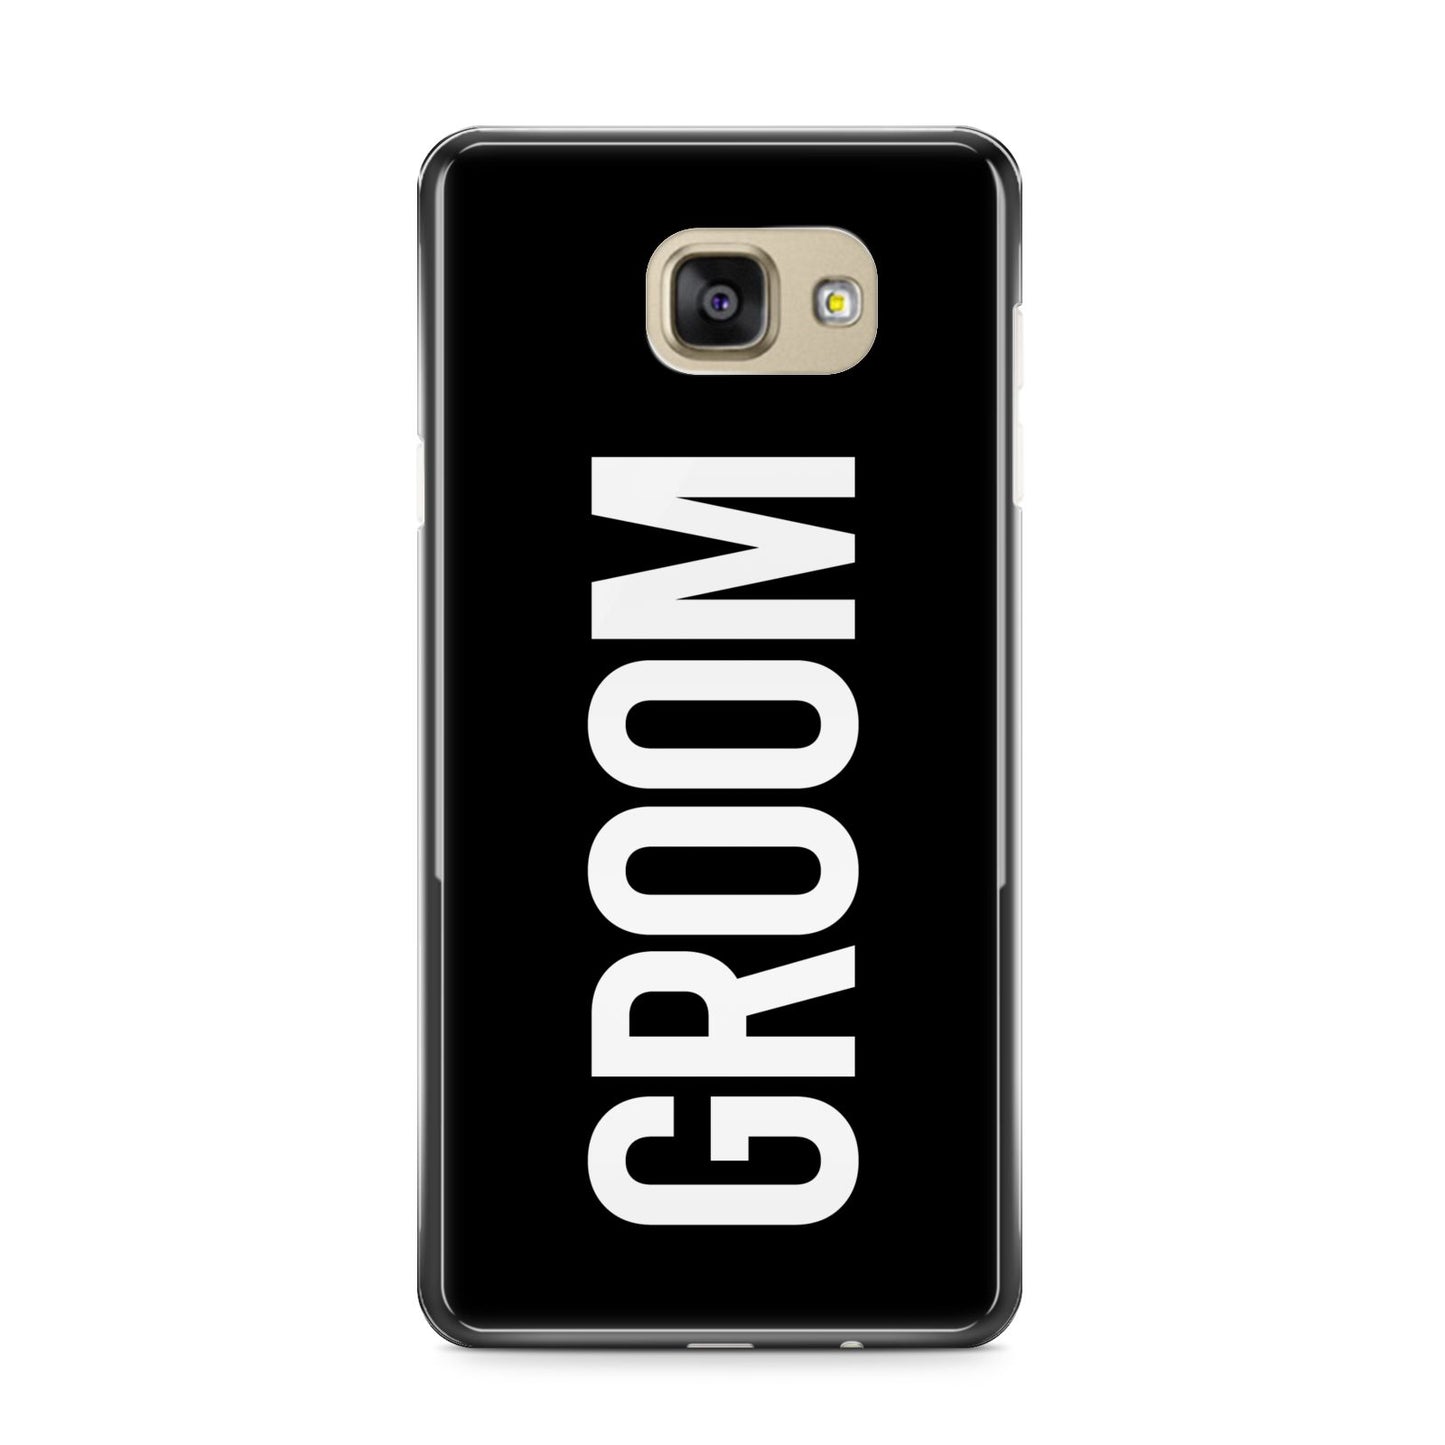 Groom Samsung Galaxy A9 2016 Case on gold phone